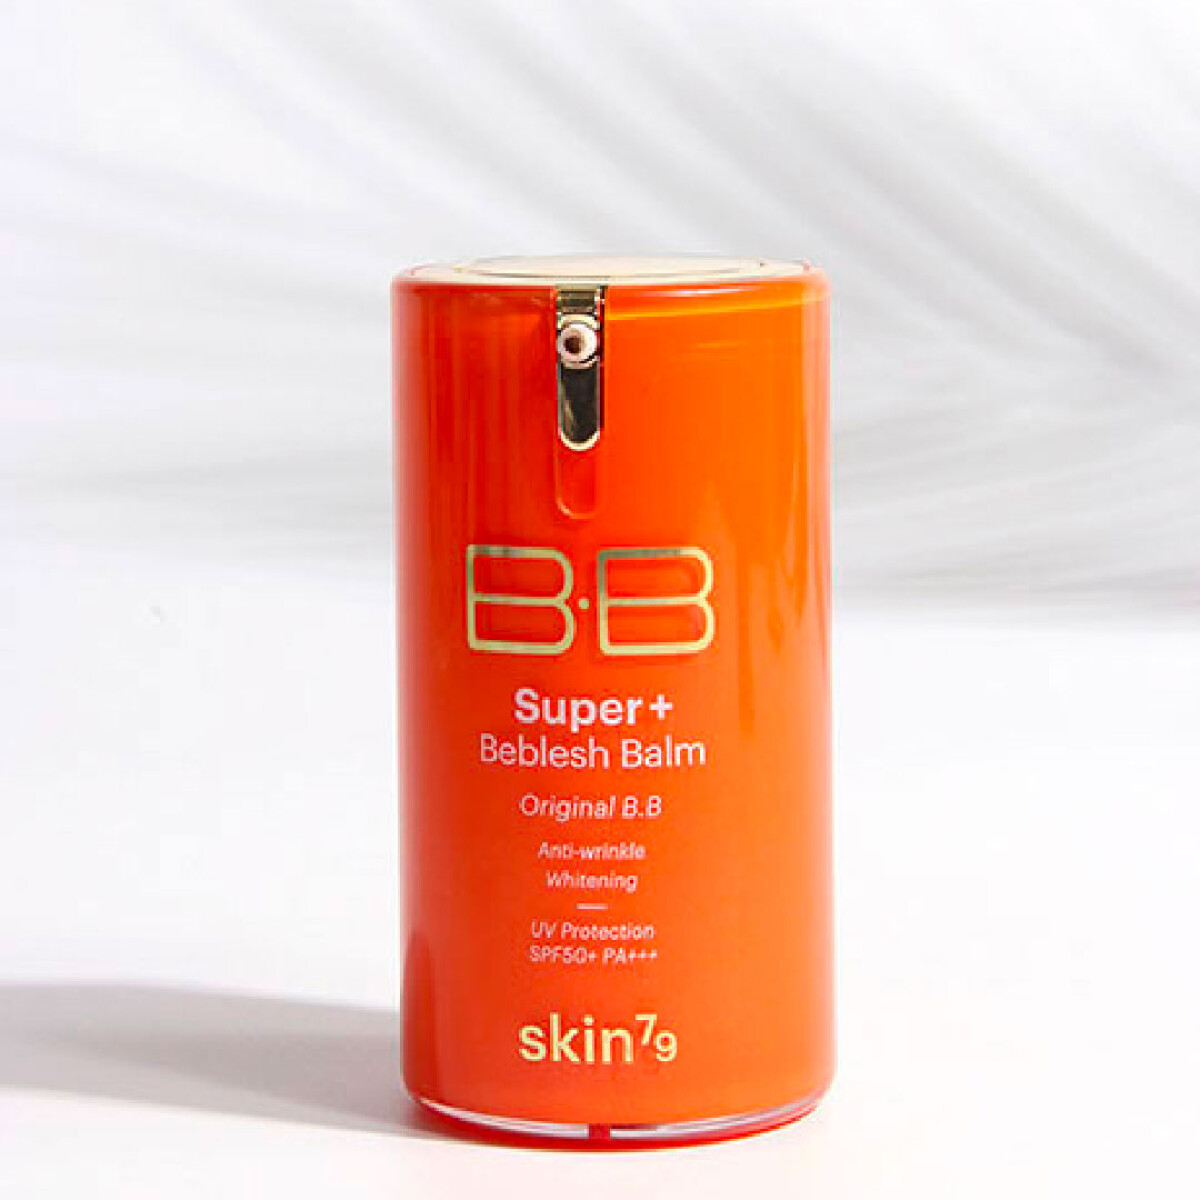 BB Cream Orange - Skin79 Super Plus Beblesh Balm ORANGE SPF 50 PA +++ 